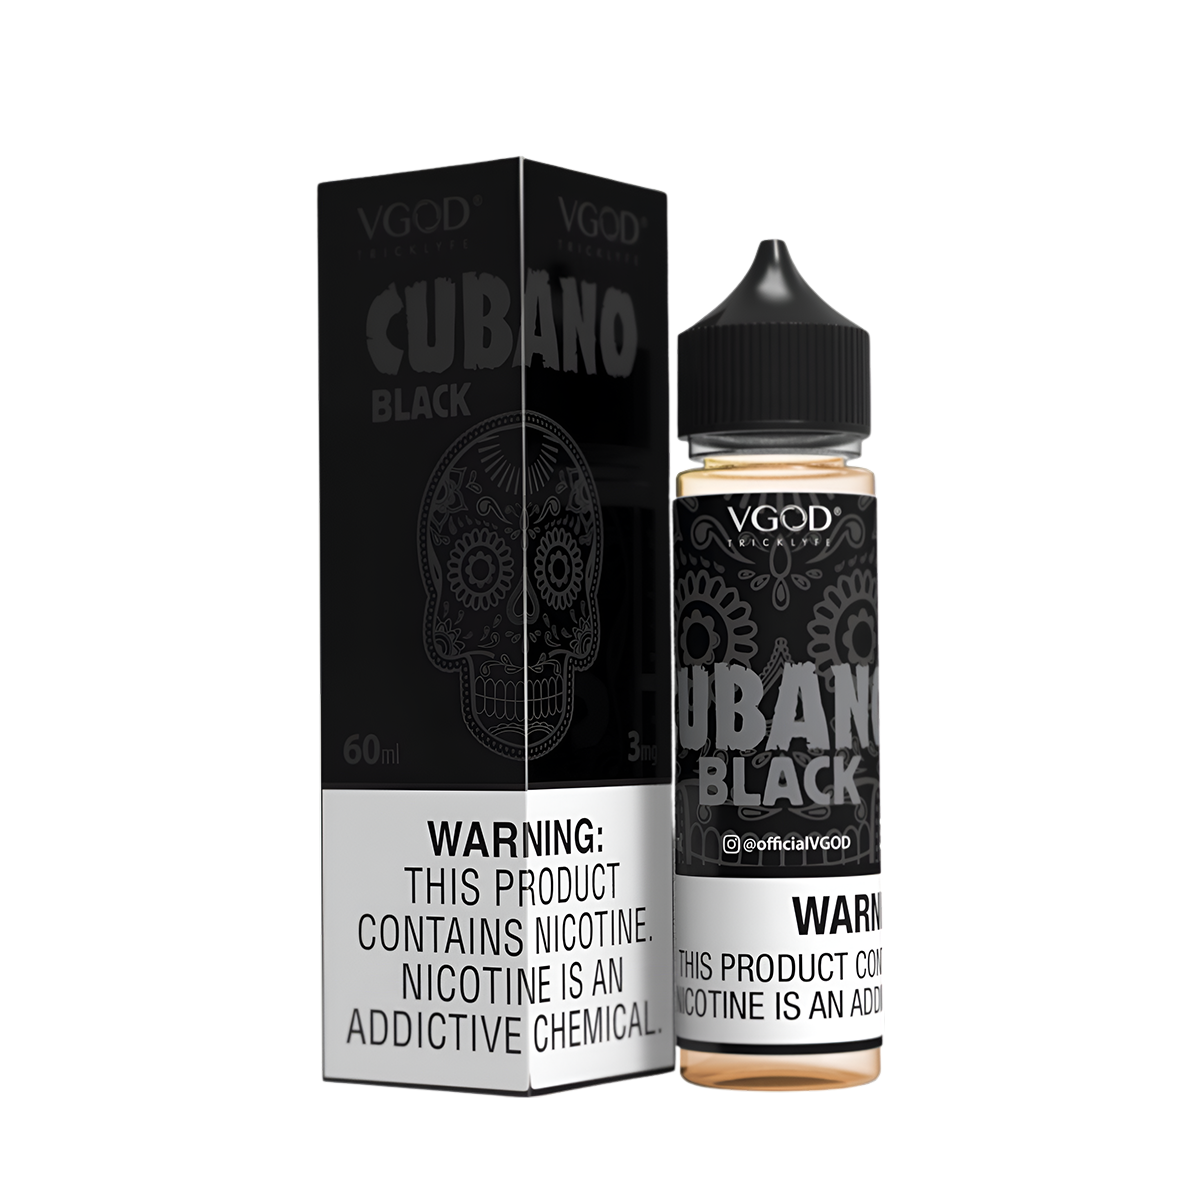 VGOD Cigar Line Freebase Vape Juice 0 Mg 60 Ml Cubano Black